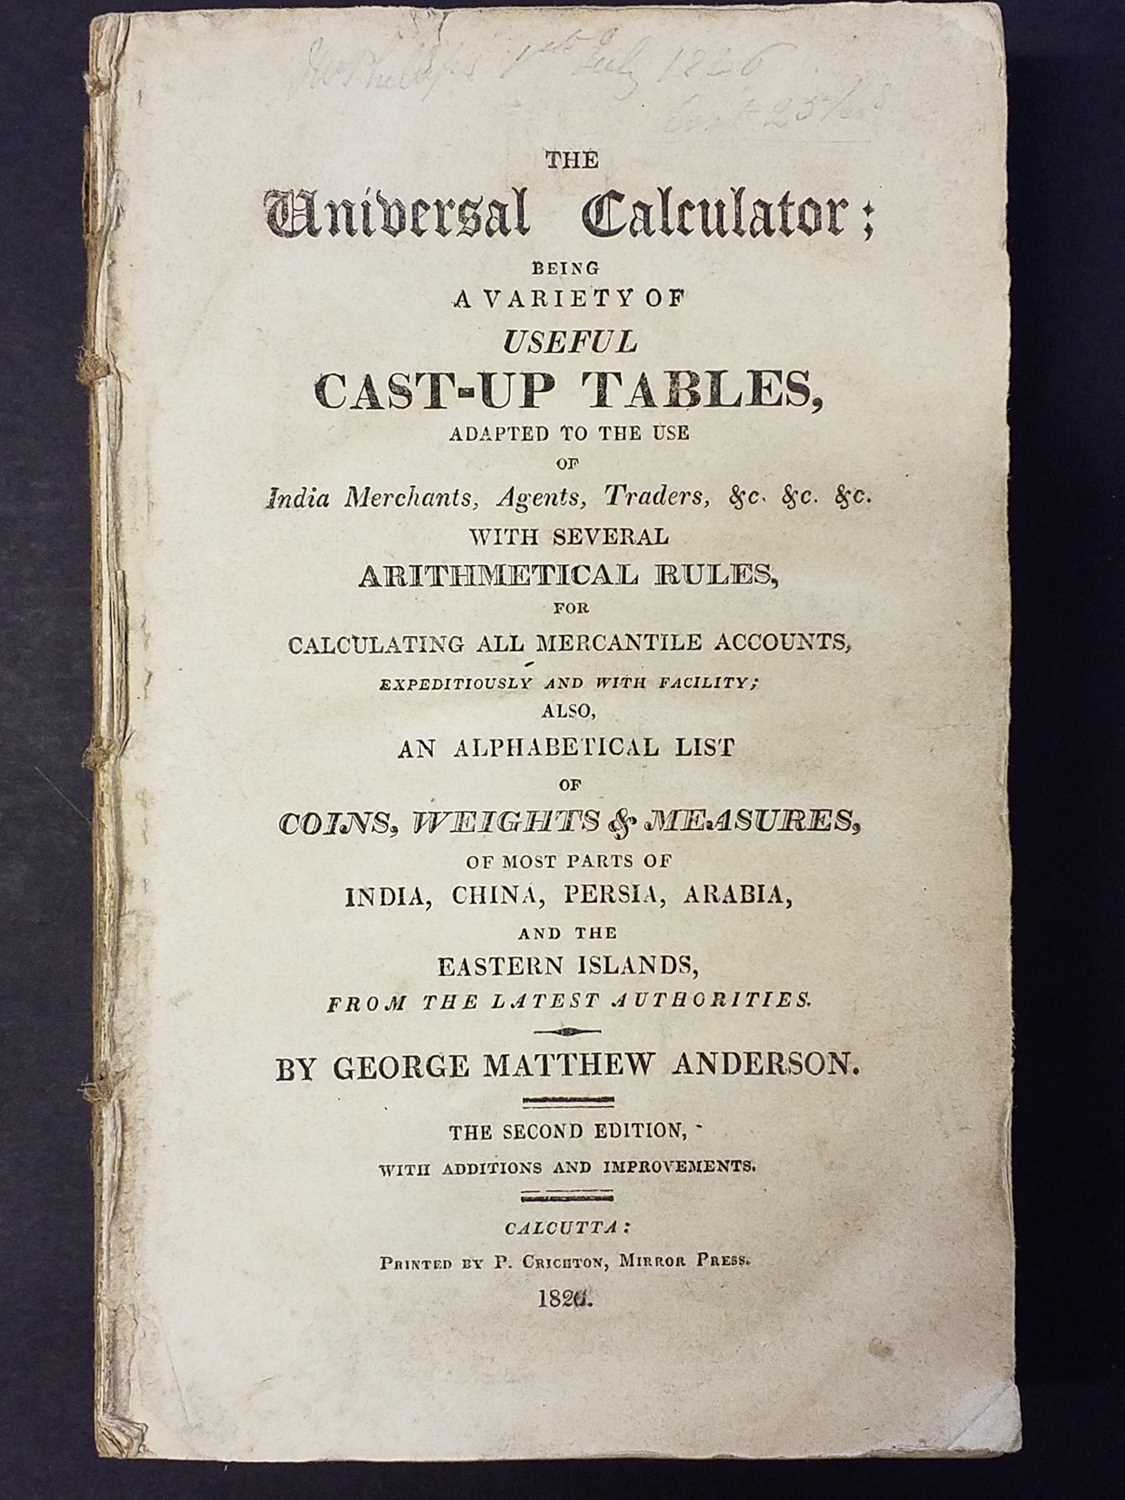 Lot 2 - Anderson (George Matthew). The Universal Calculator, 2nd edition, Calcutta: P. Crichton, 1826